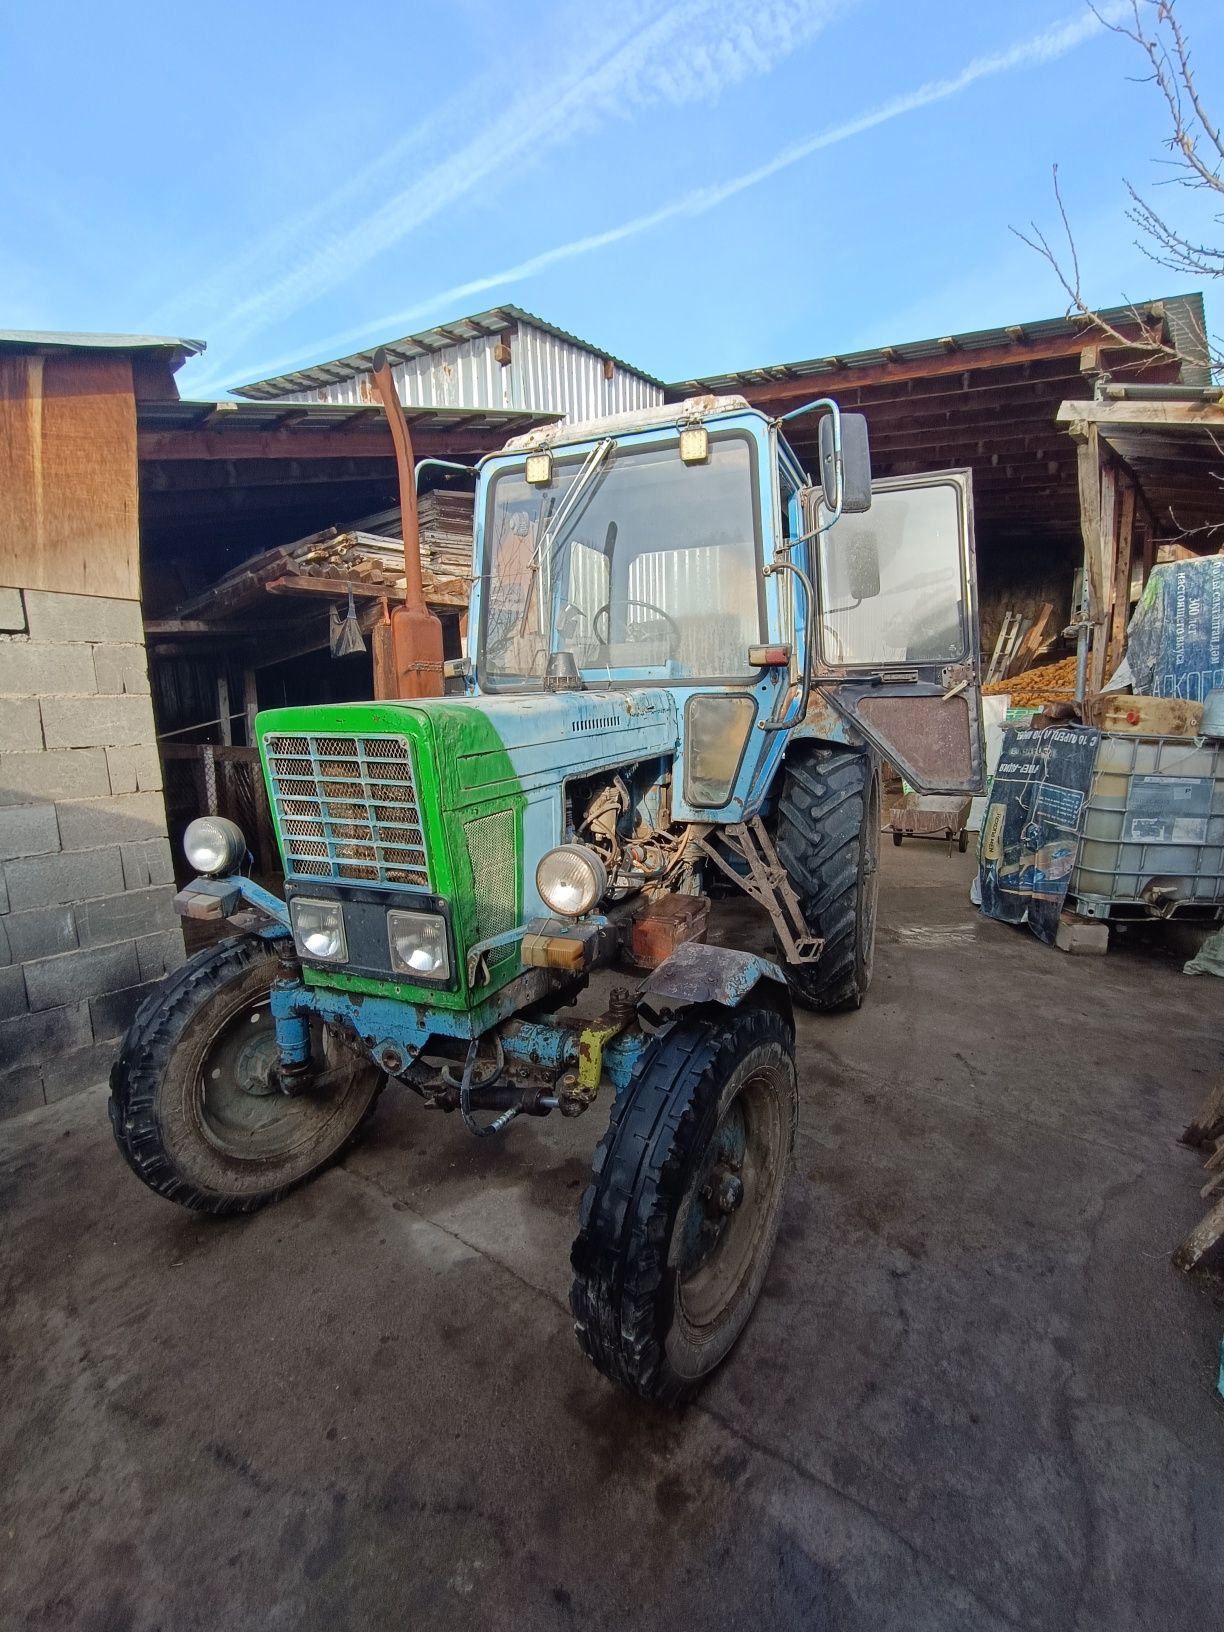 Продам трактор МТЗ 80 Беларусь